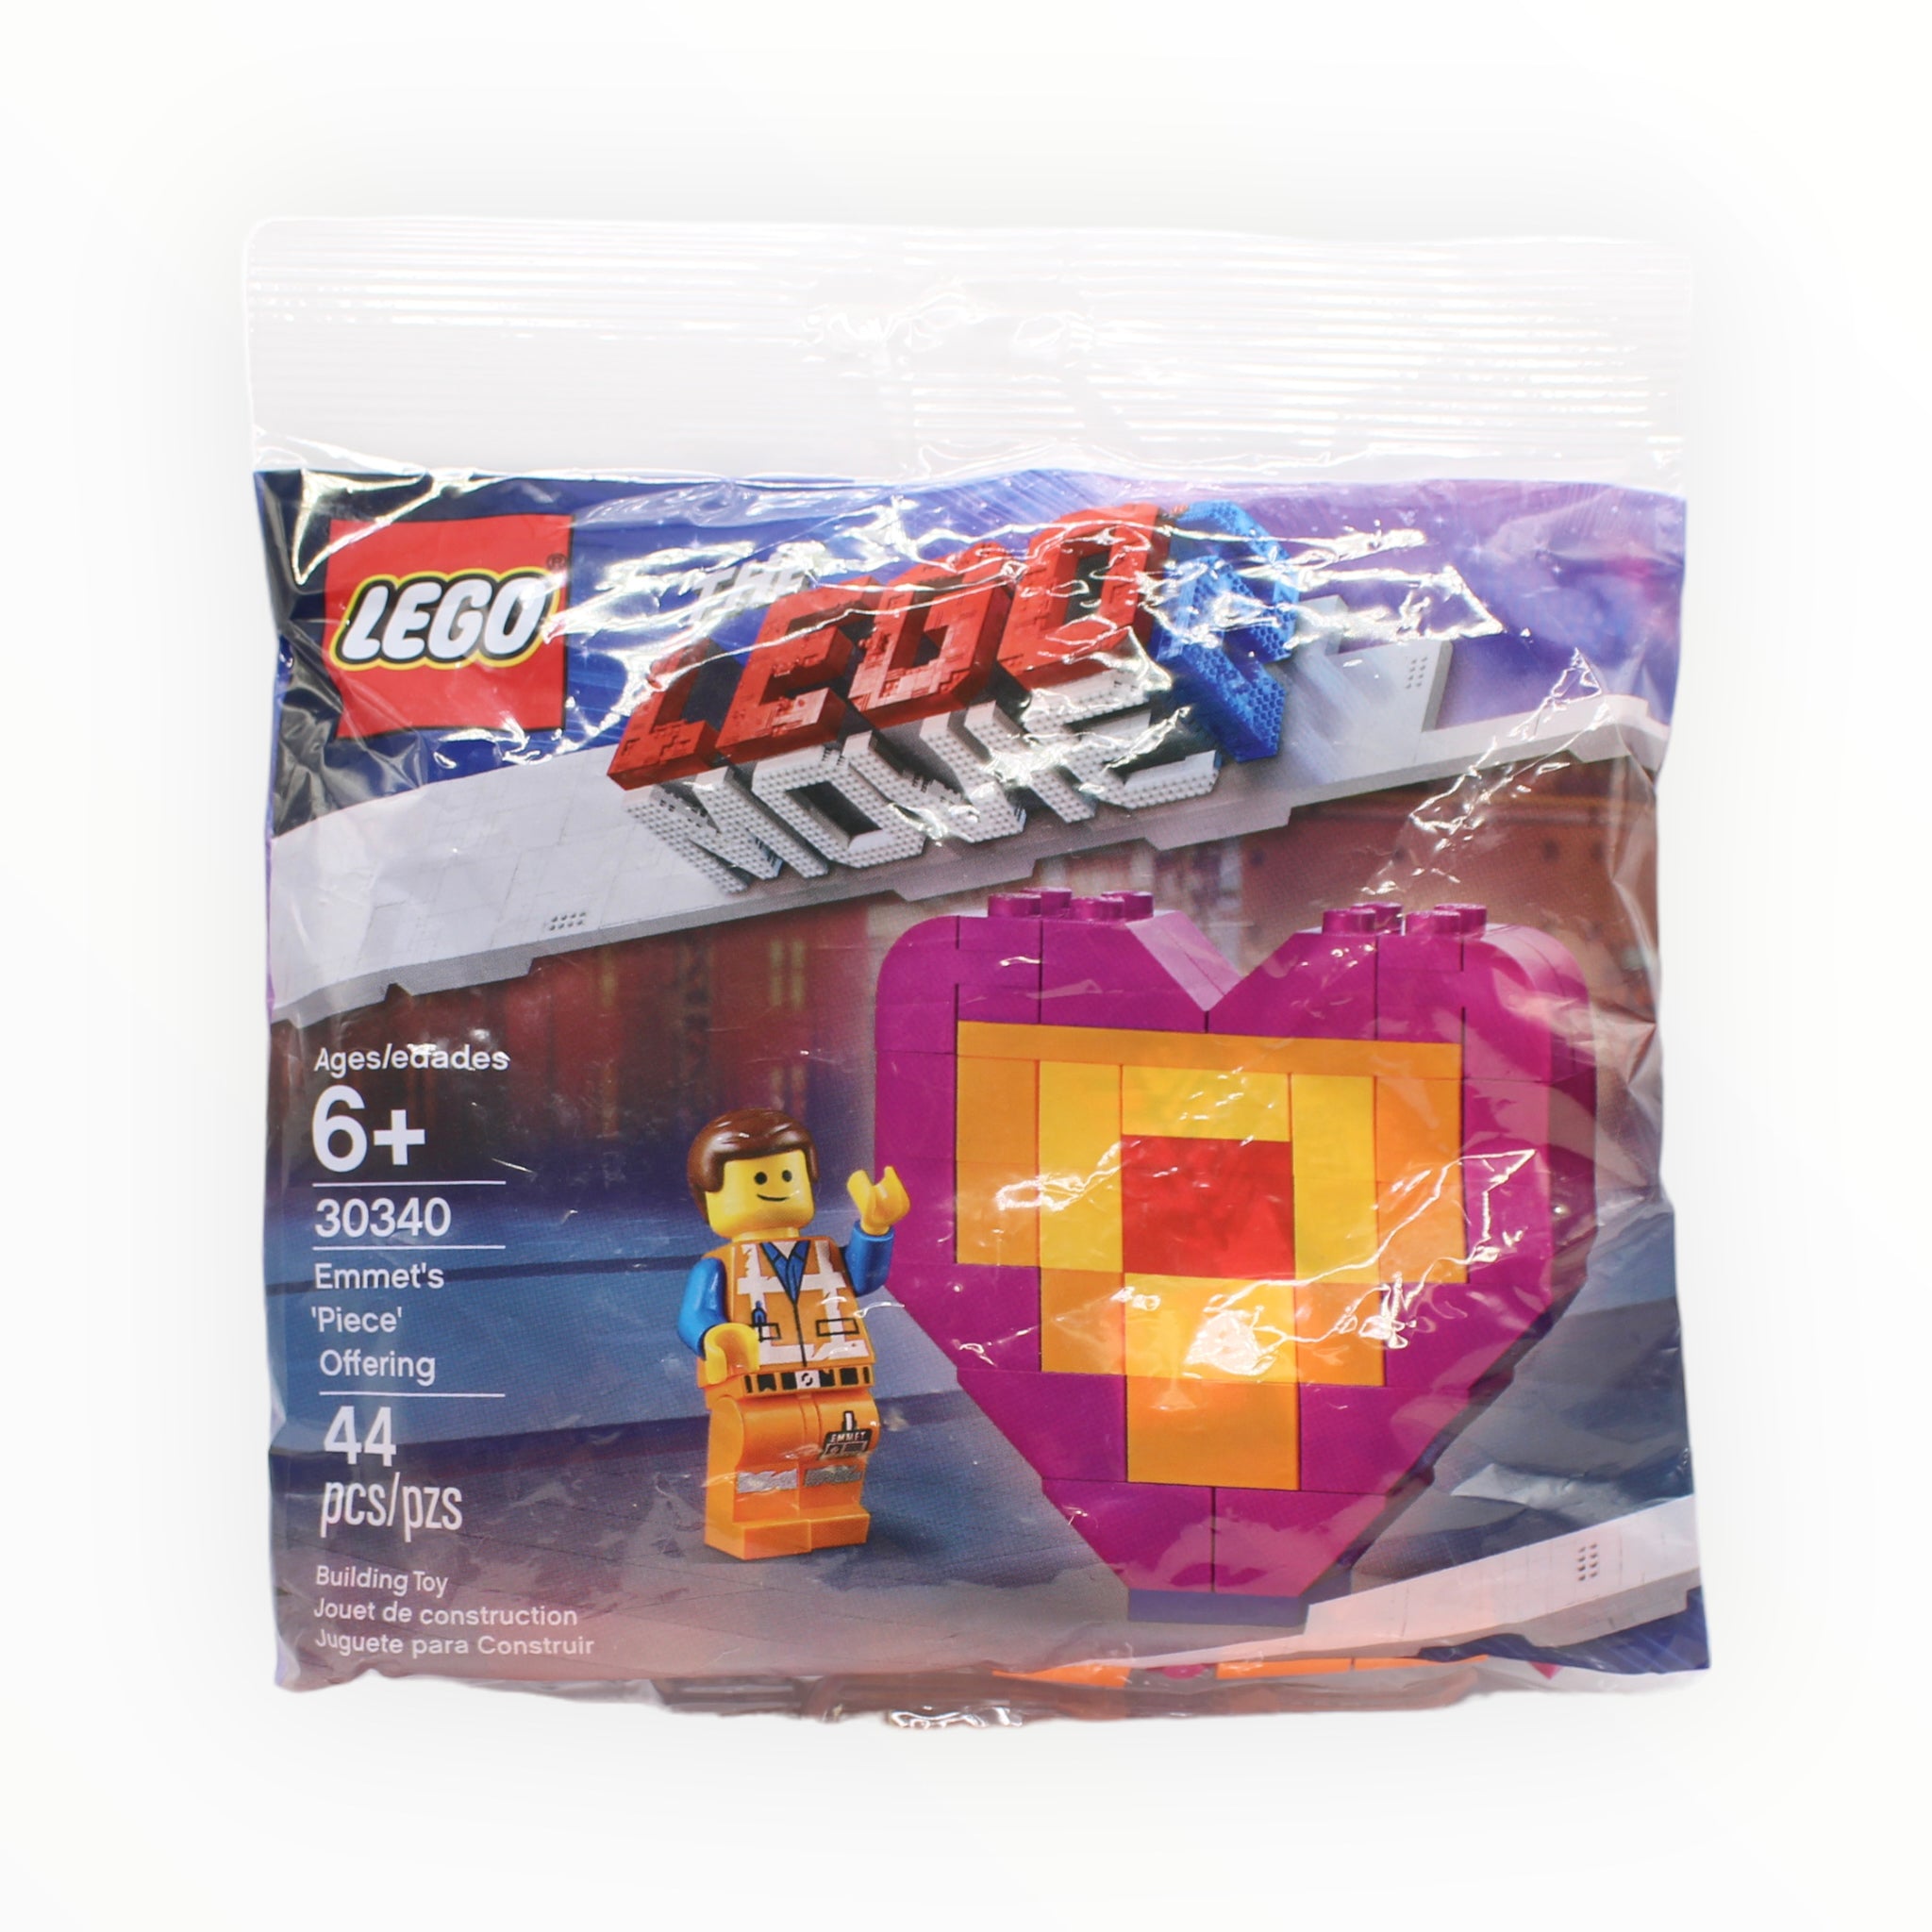 Polybag 30340 LEGO Movie 2 Emmet’s ‘Piece’ Offering